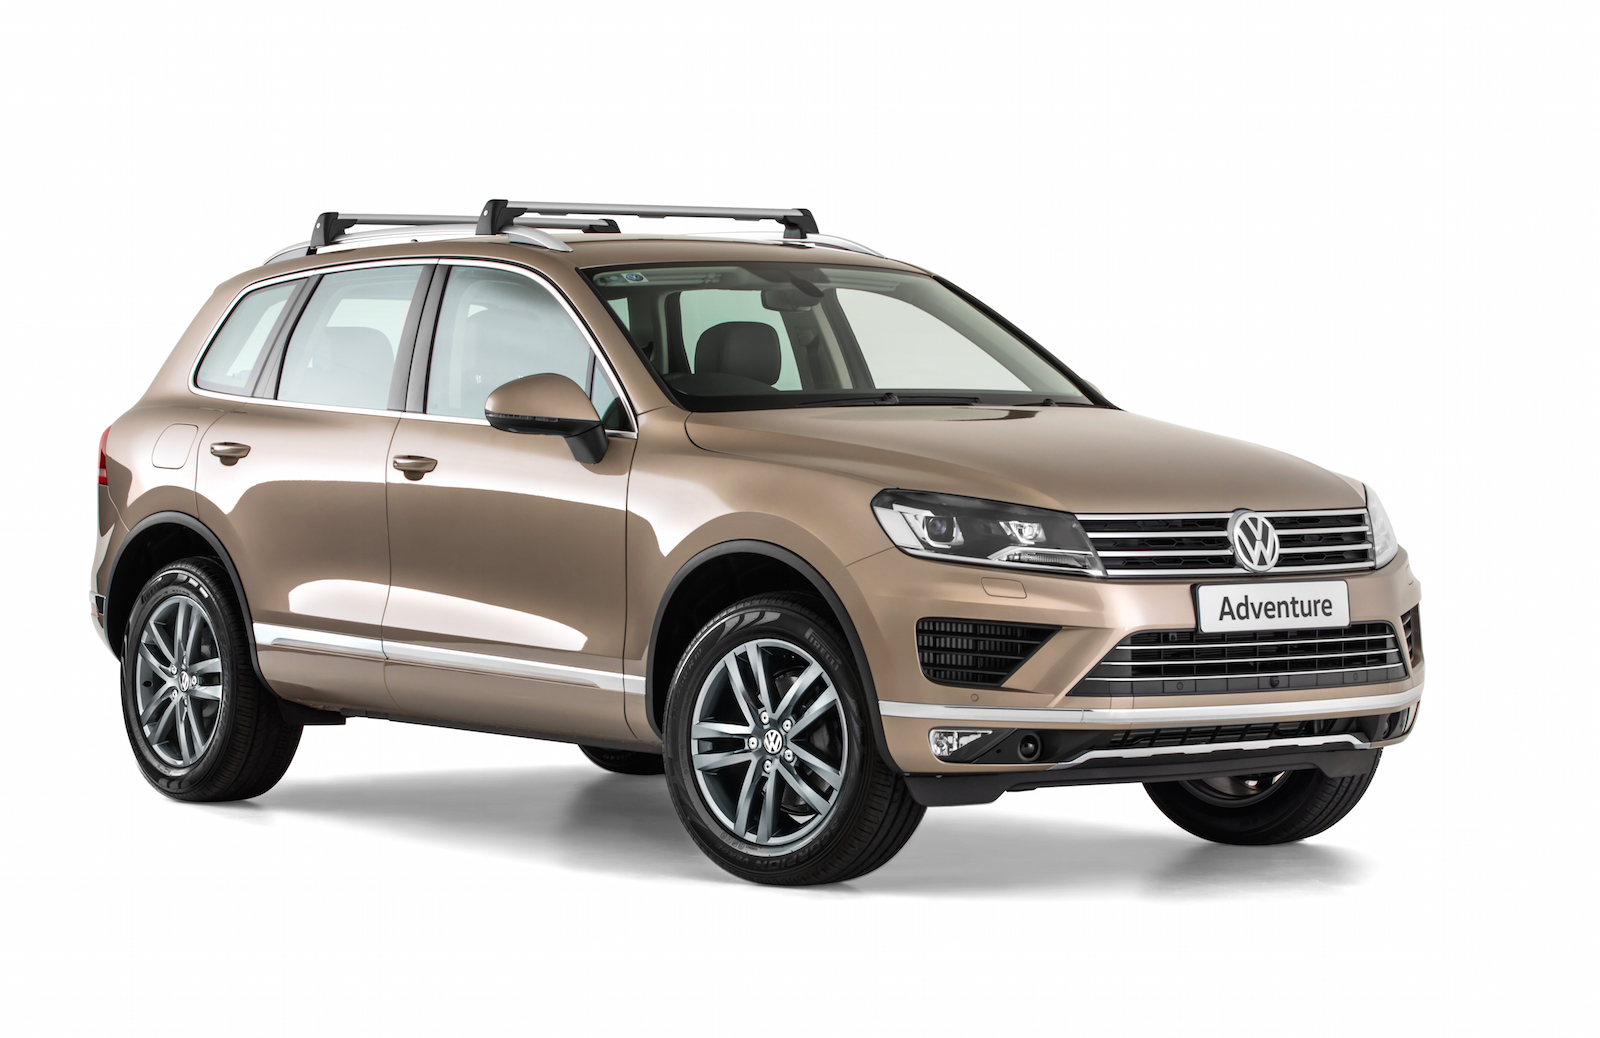 Volkswagen Touareg Adventure edition announced for Australia